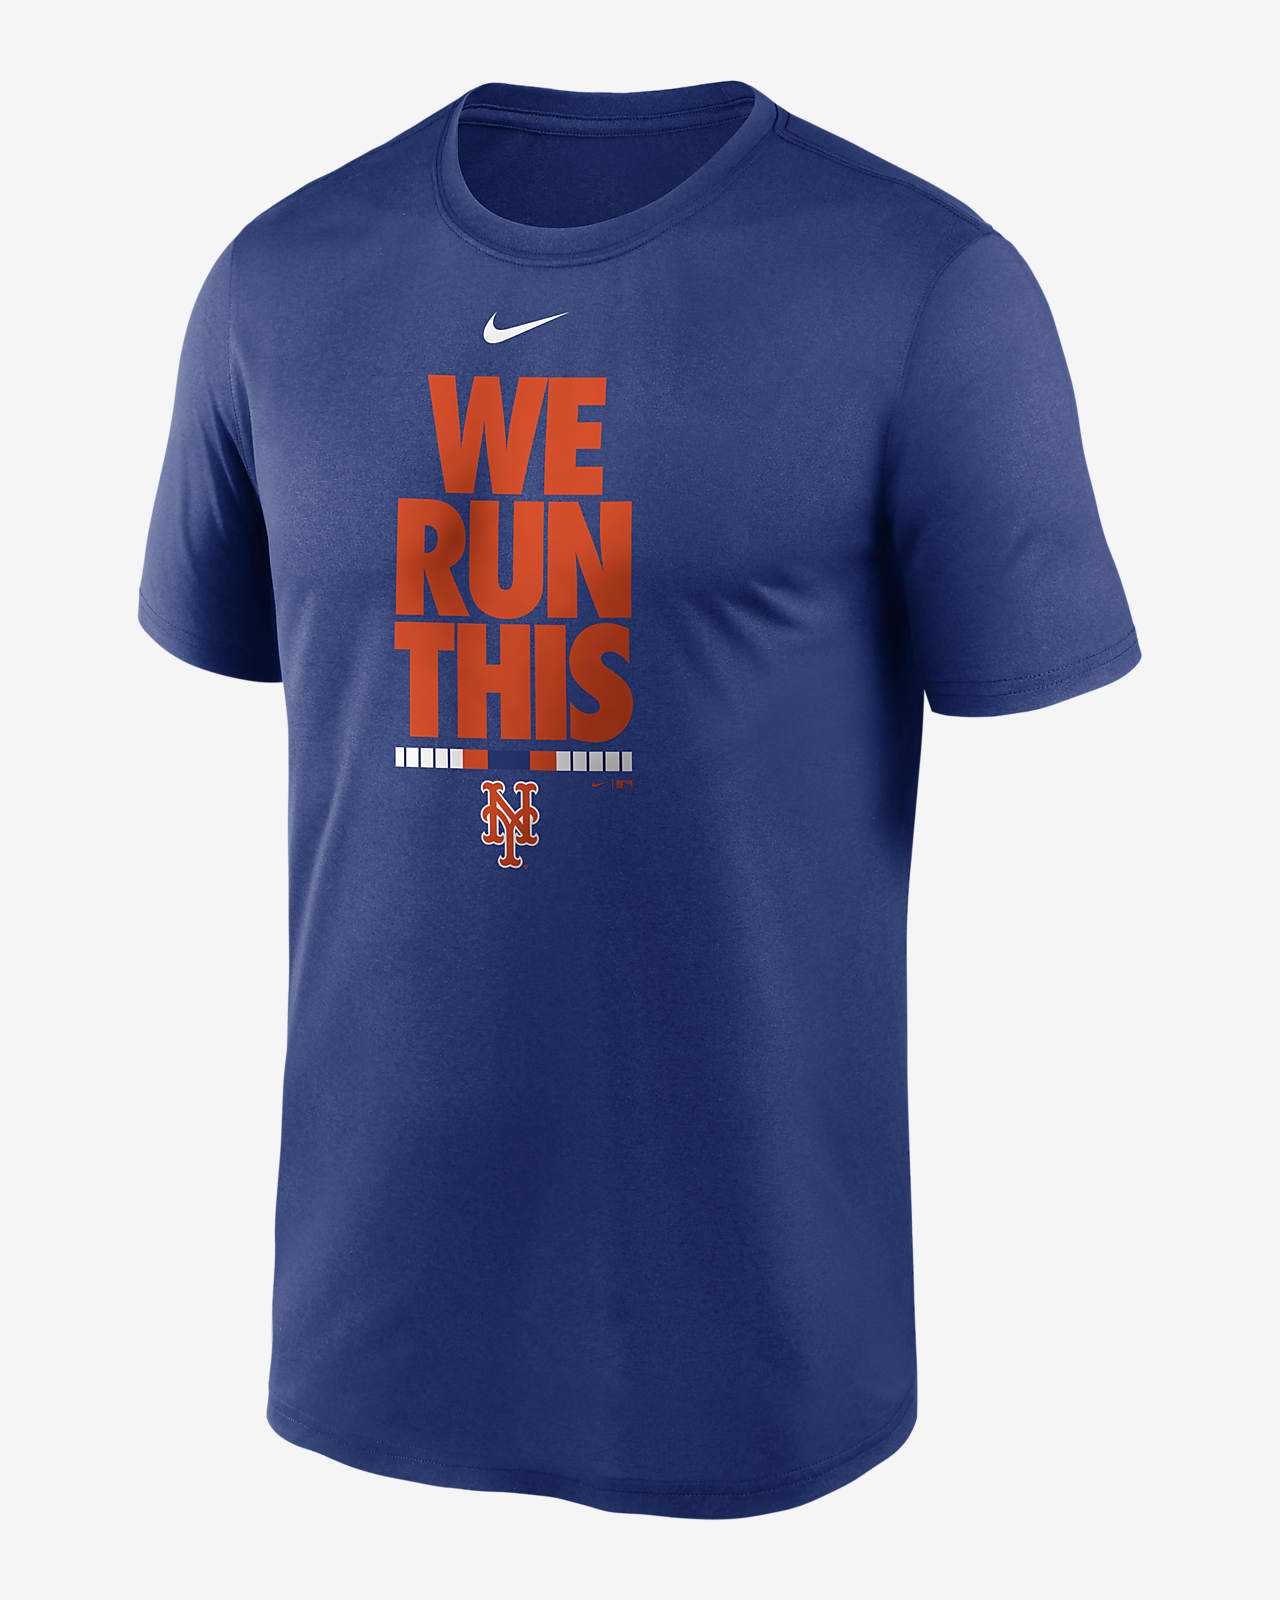 Nike (MLB New York Mets) Big Kids' (Boys') T-Shirt